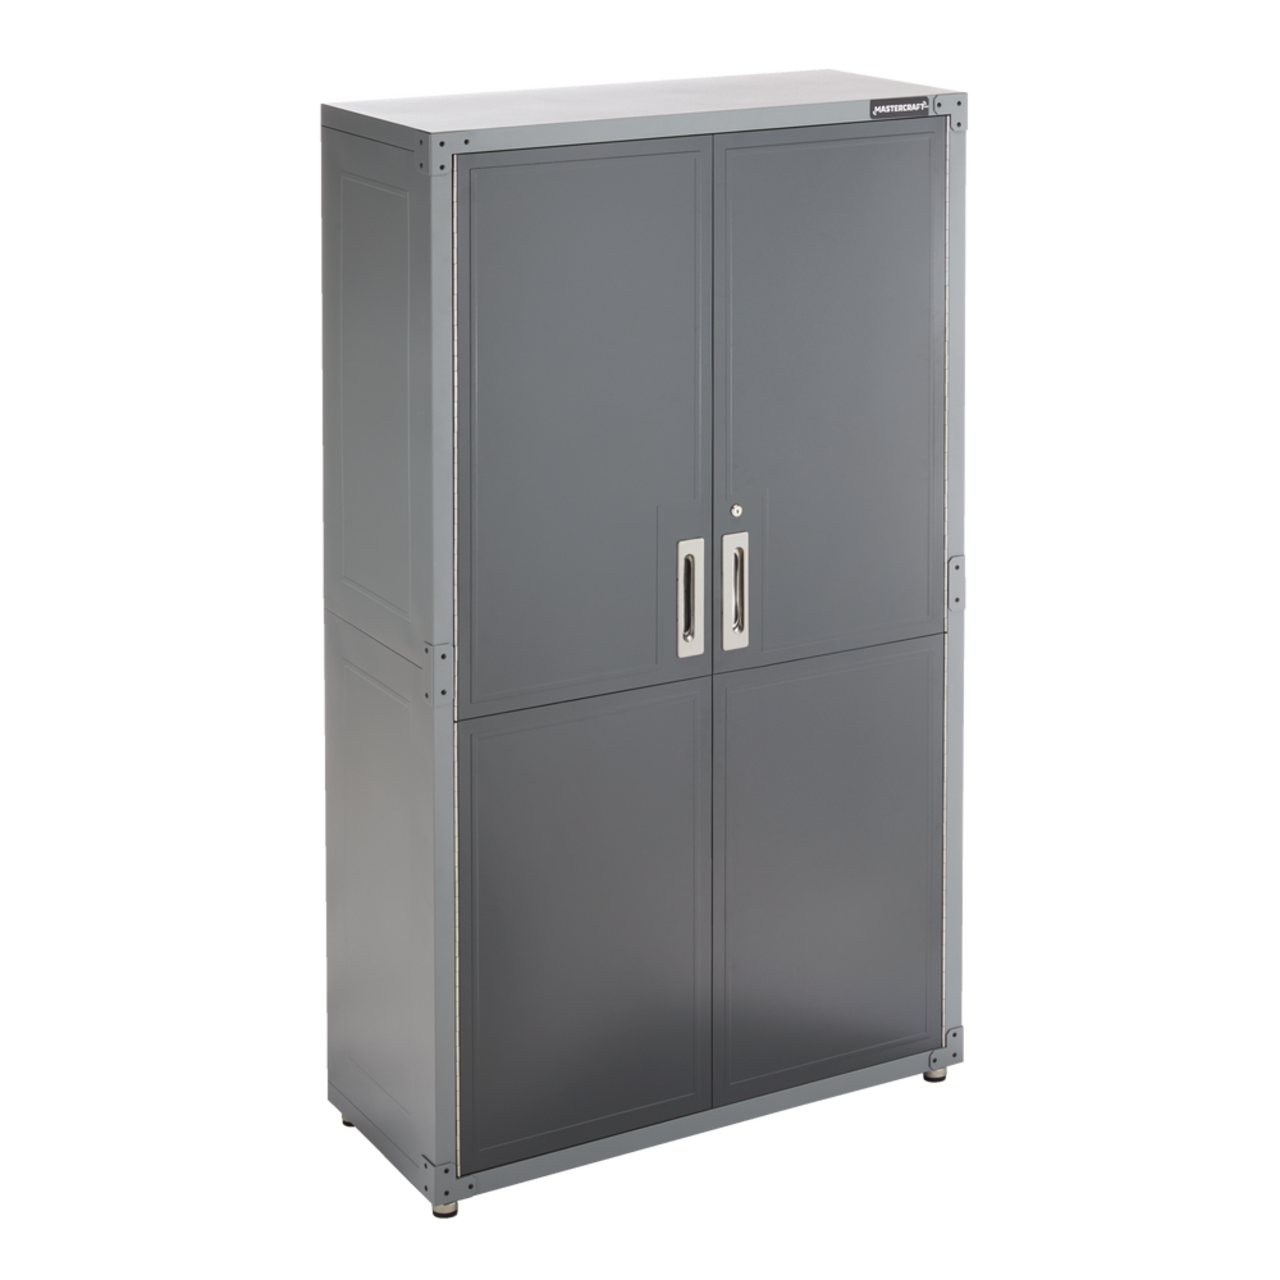 Metal Storage Cabinet Metal Garage Locker Cabinets with Locking Door and 4 Adjustable Shelves, Steel Classic Storage Cabinet - White - Legal